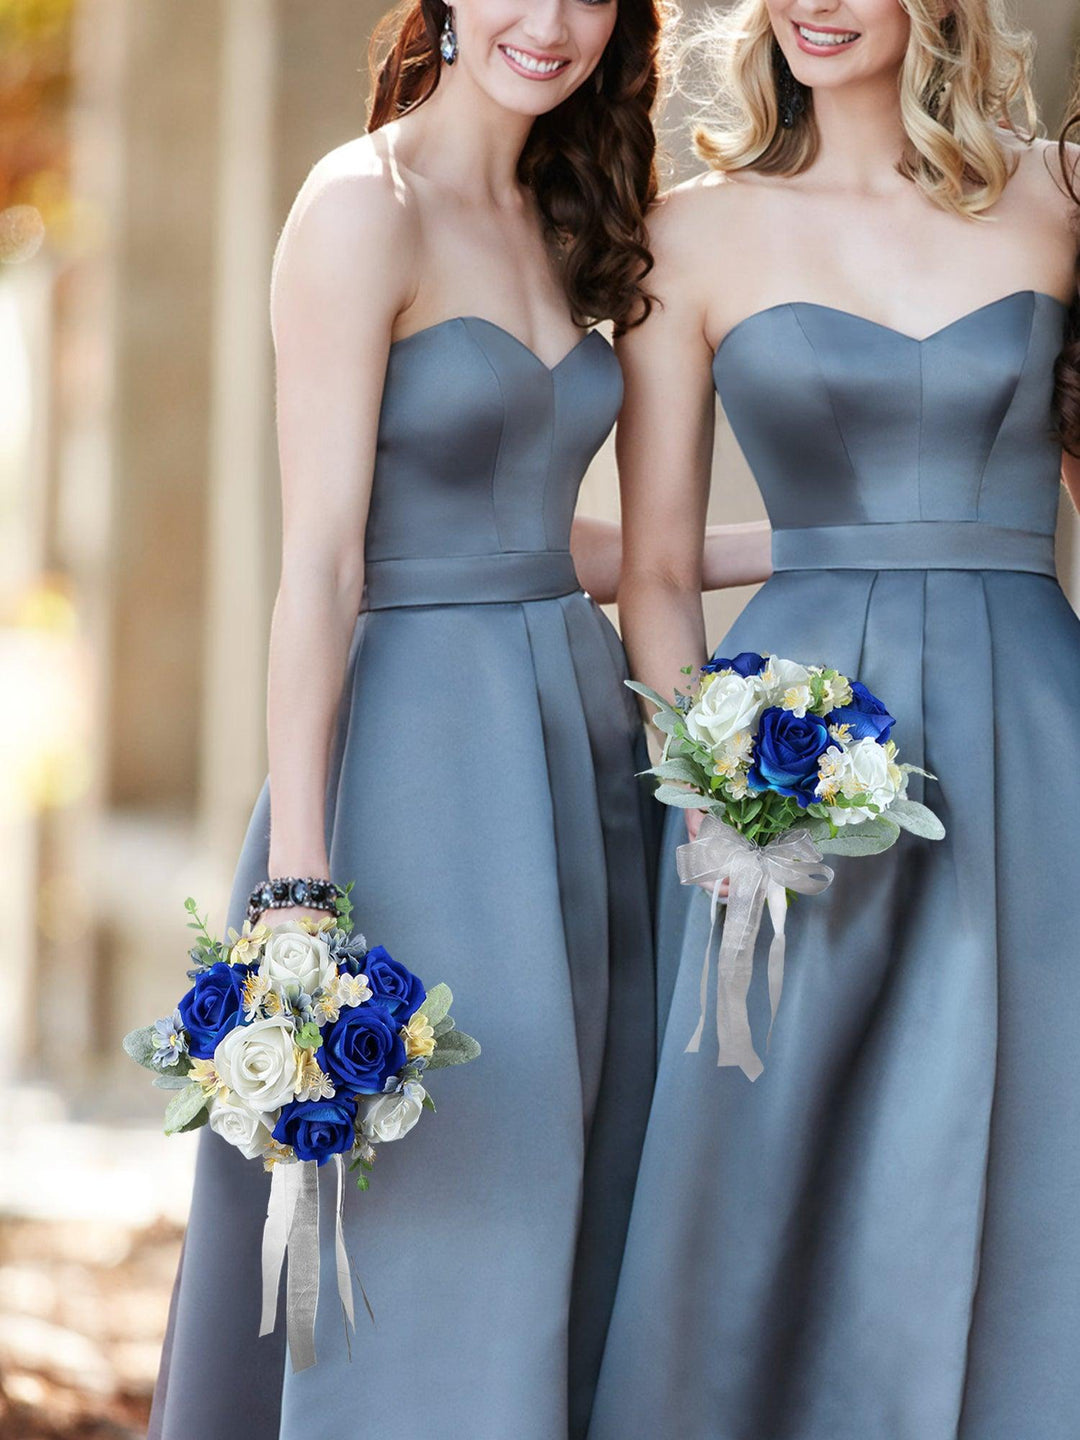 7 inch wide Sapphire Blue Bridesmaid Bouquet